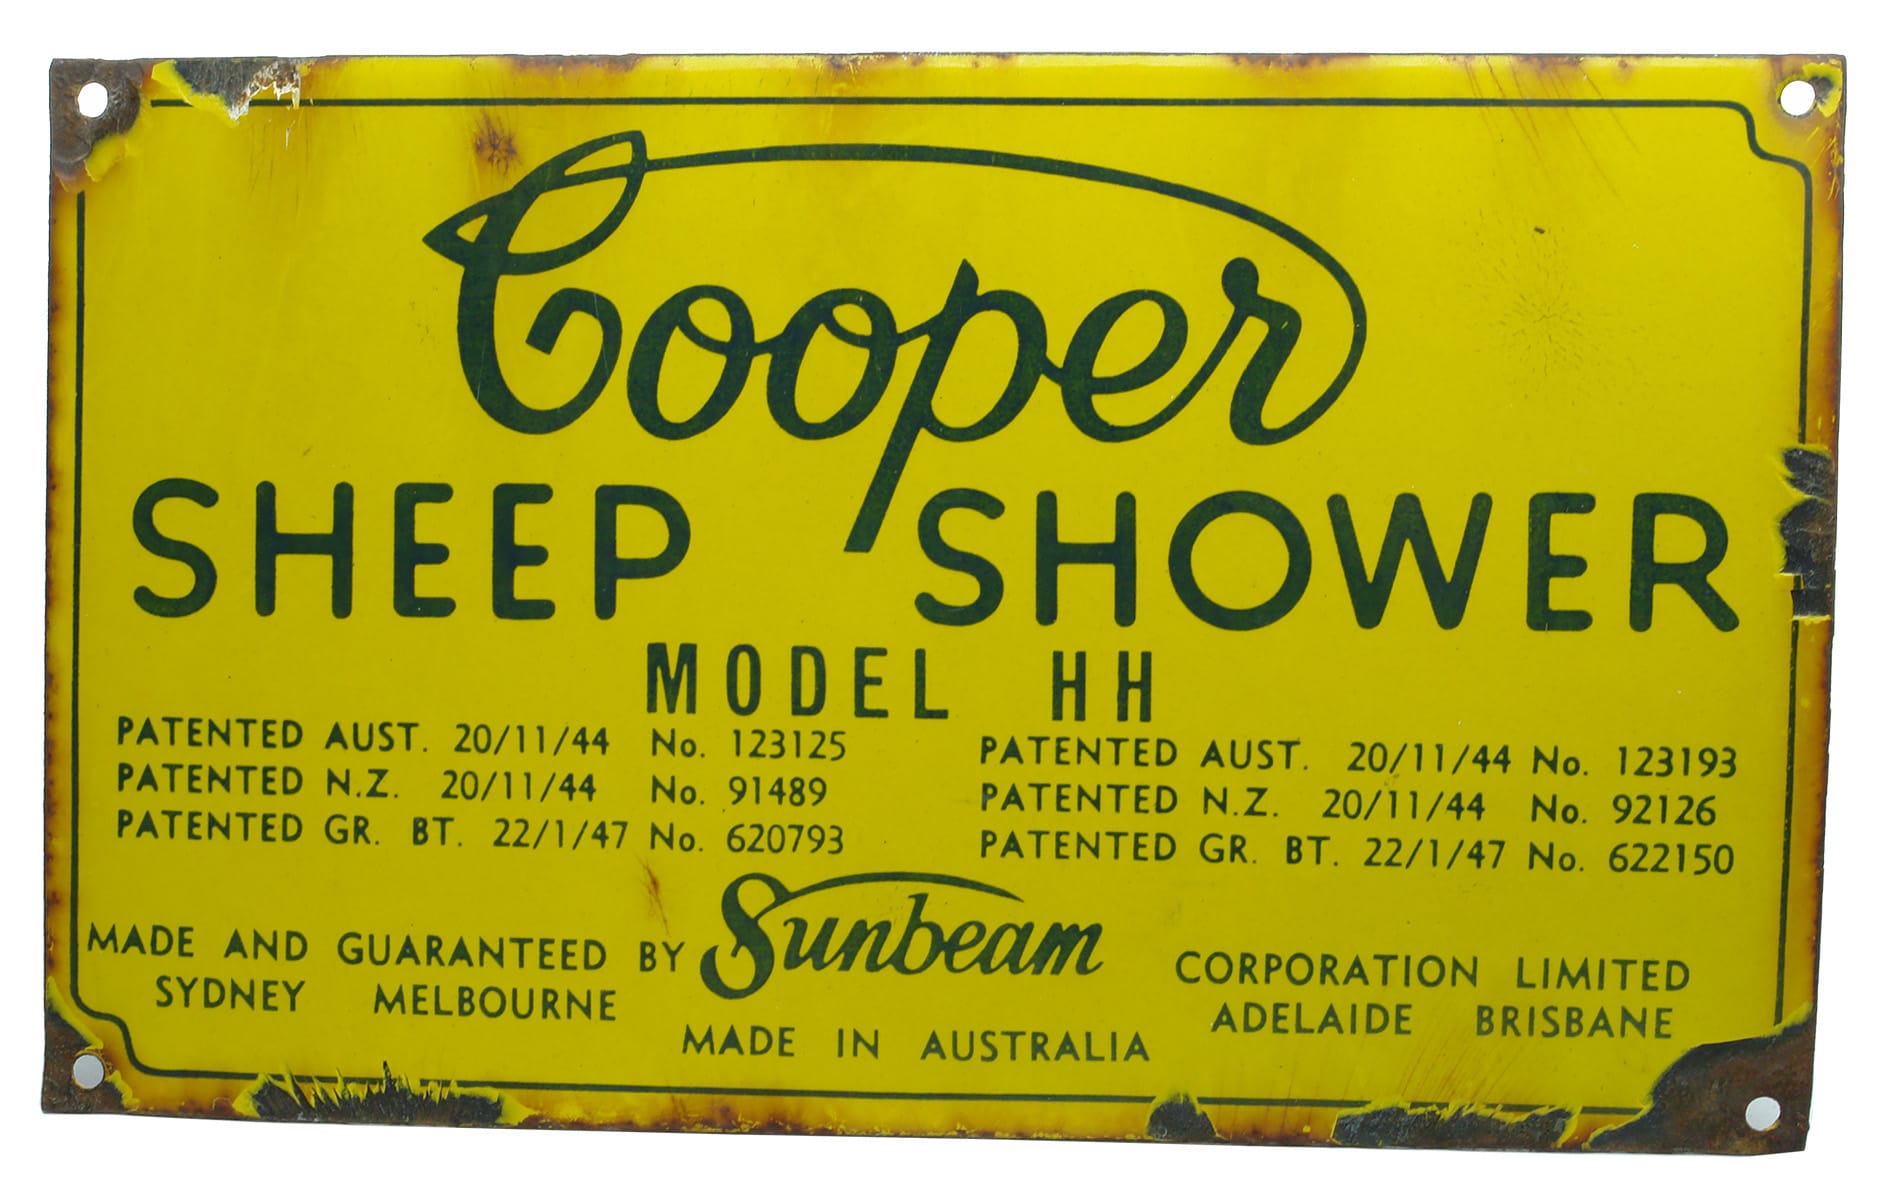 Cooper Sheep Shower Sunbeam Corporation Sign